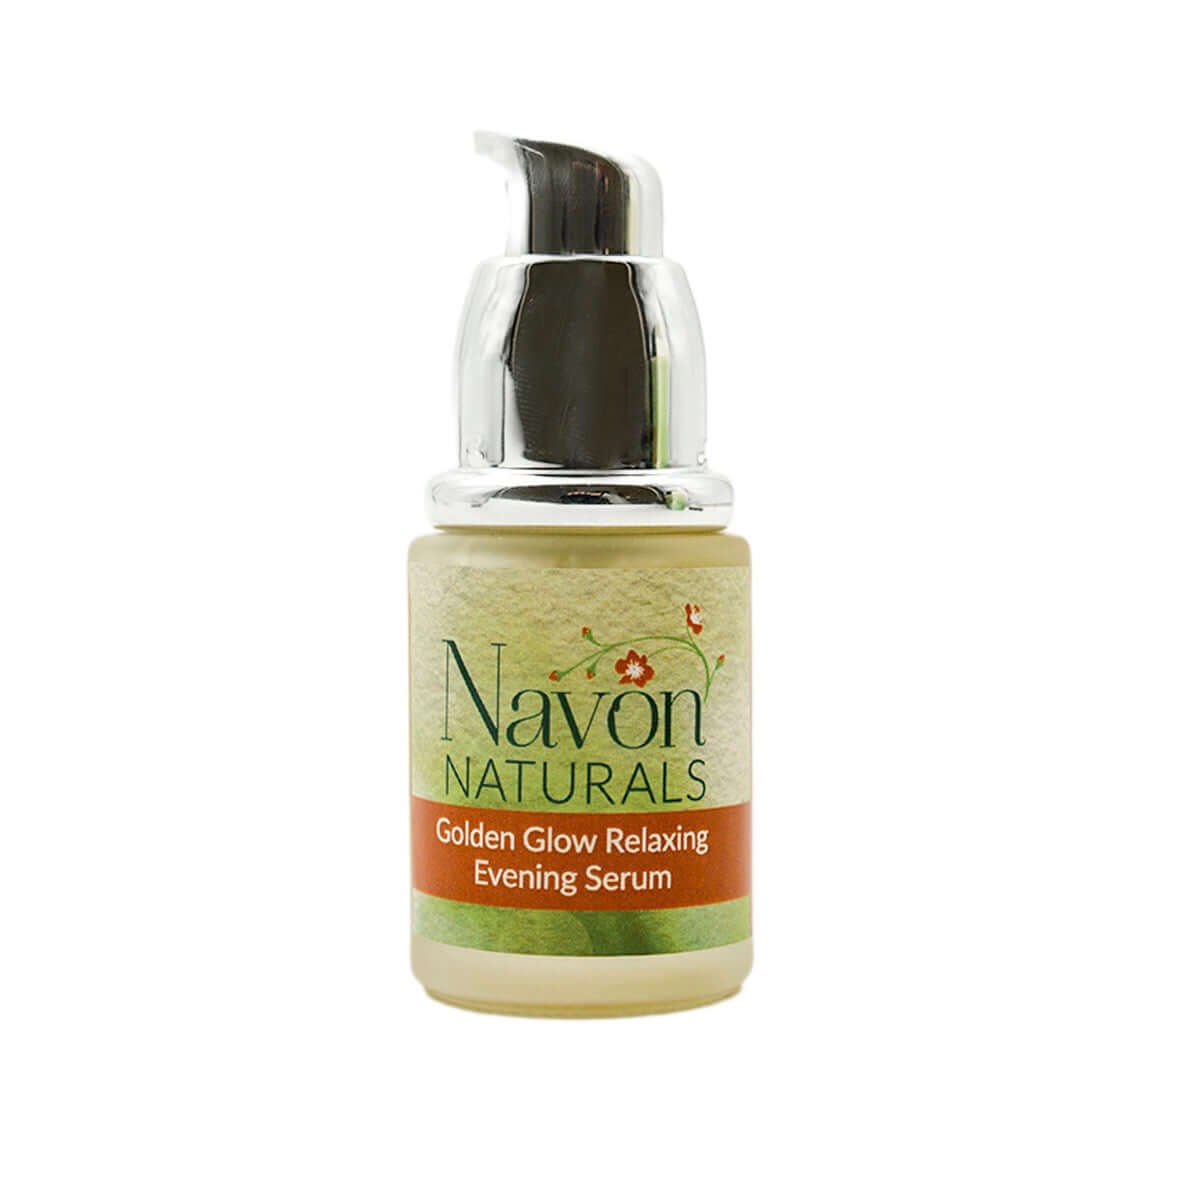 Golden Glow Relaxing Evening Serum - Navon Naturals Skincare